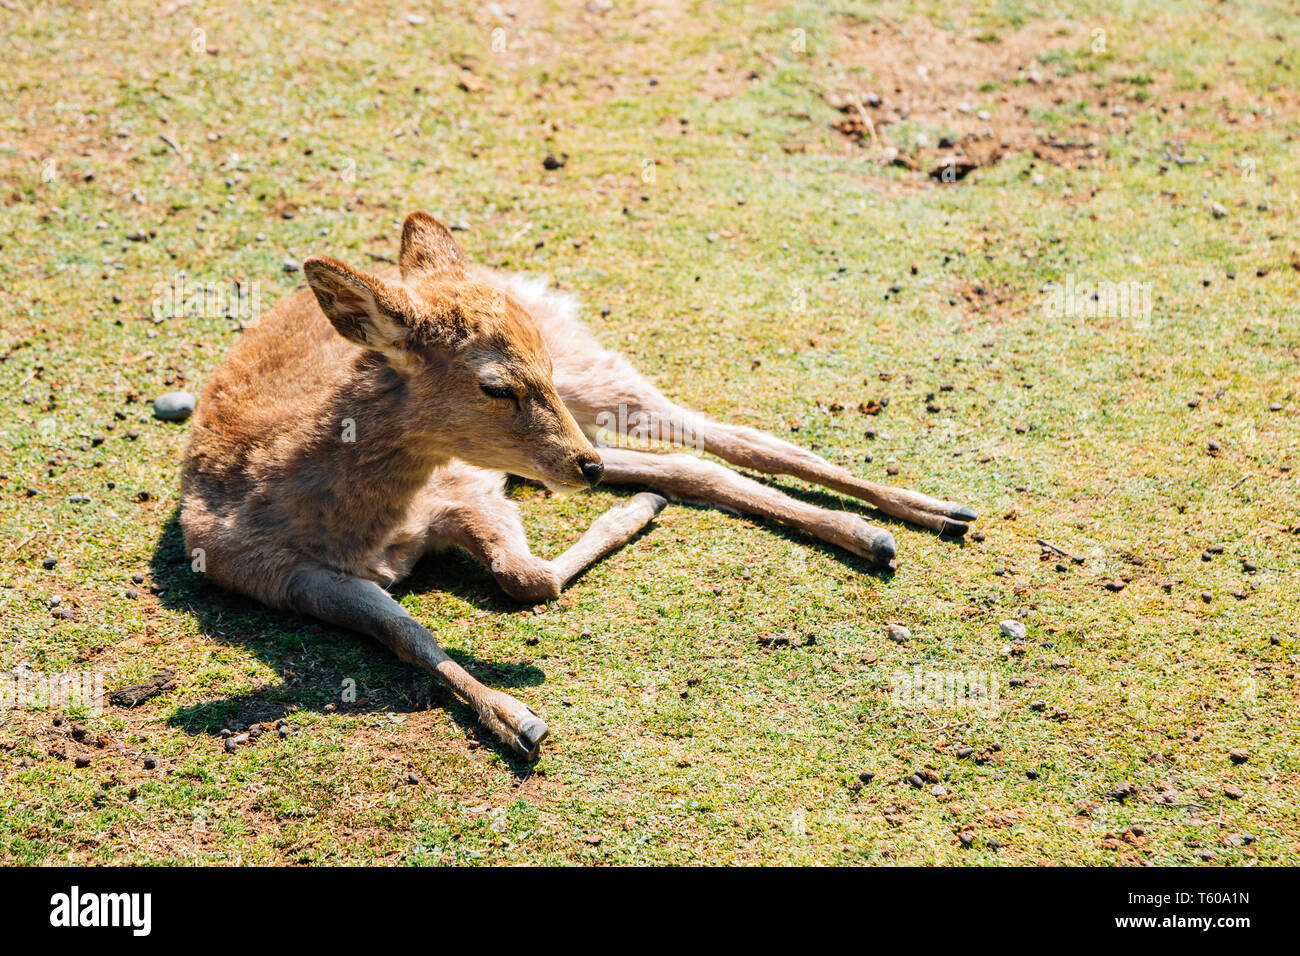 Dormir sobre el césped de ciervos en Nara, Japón Foto de stock